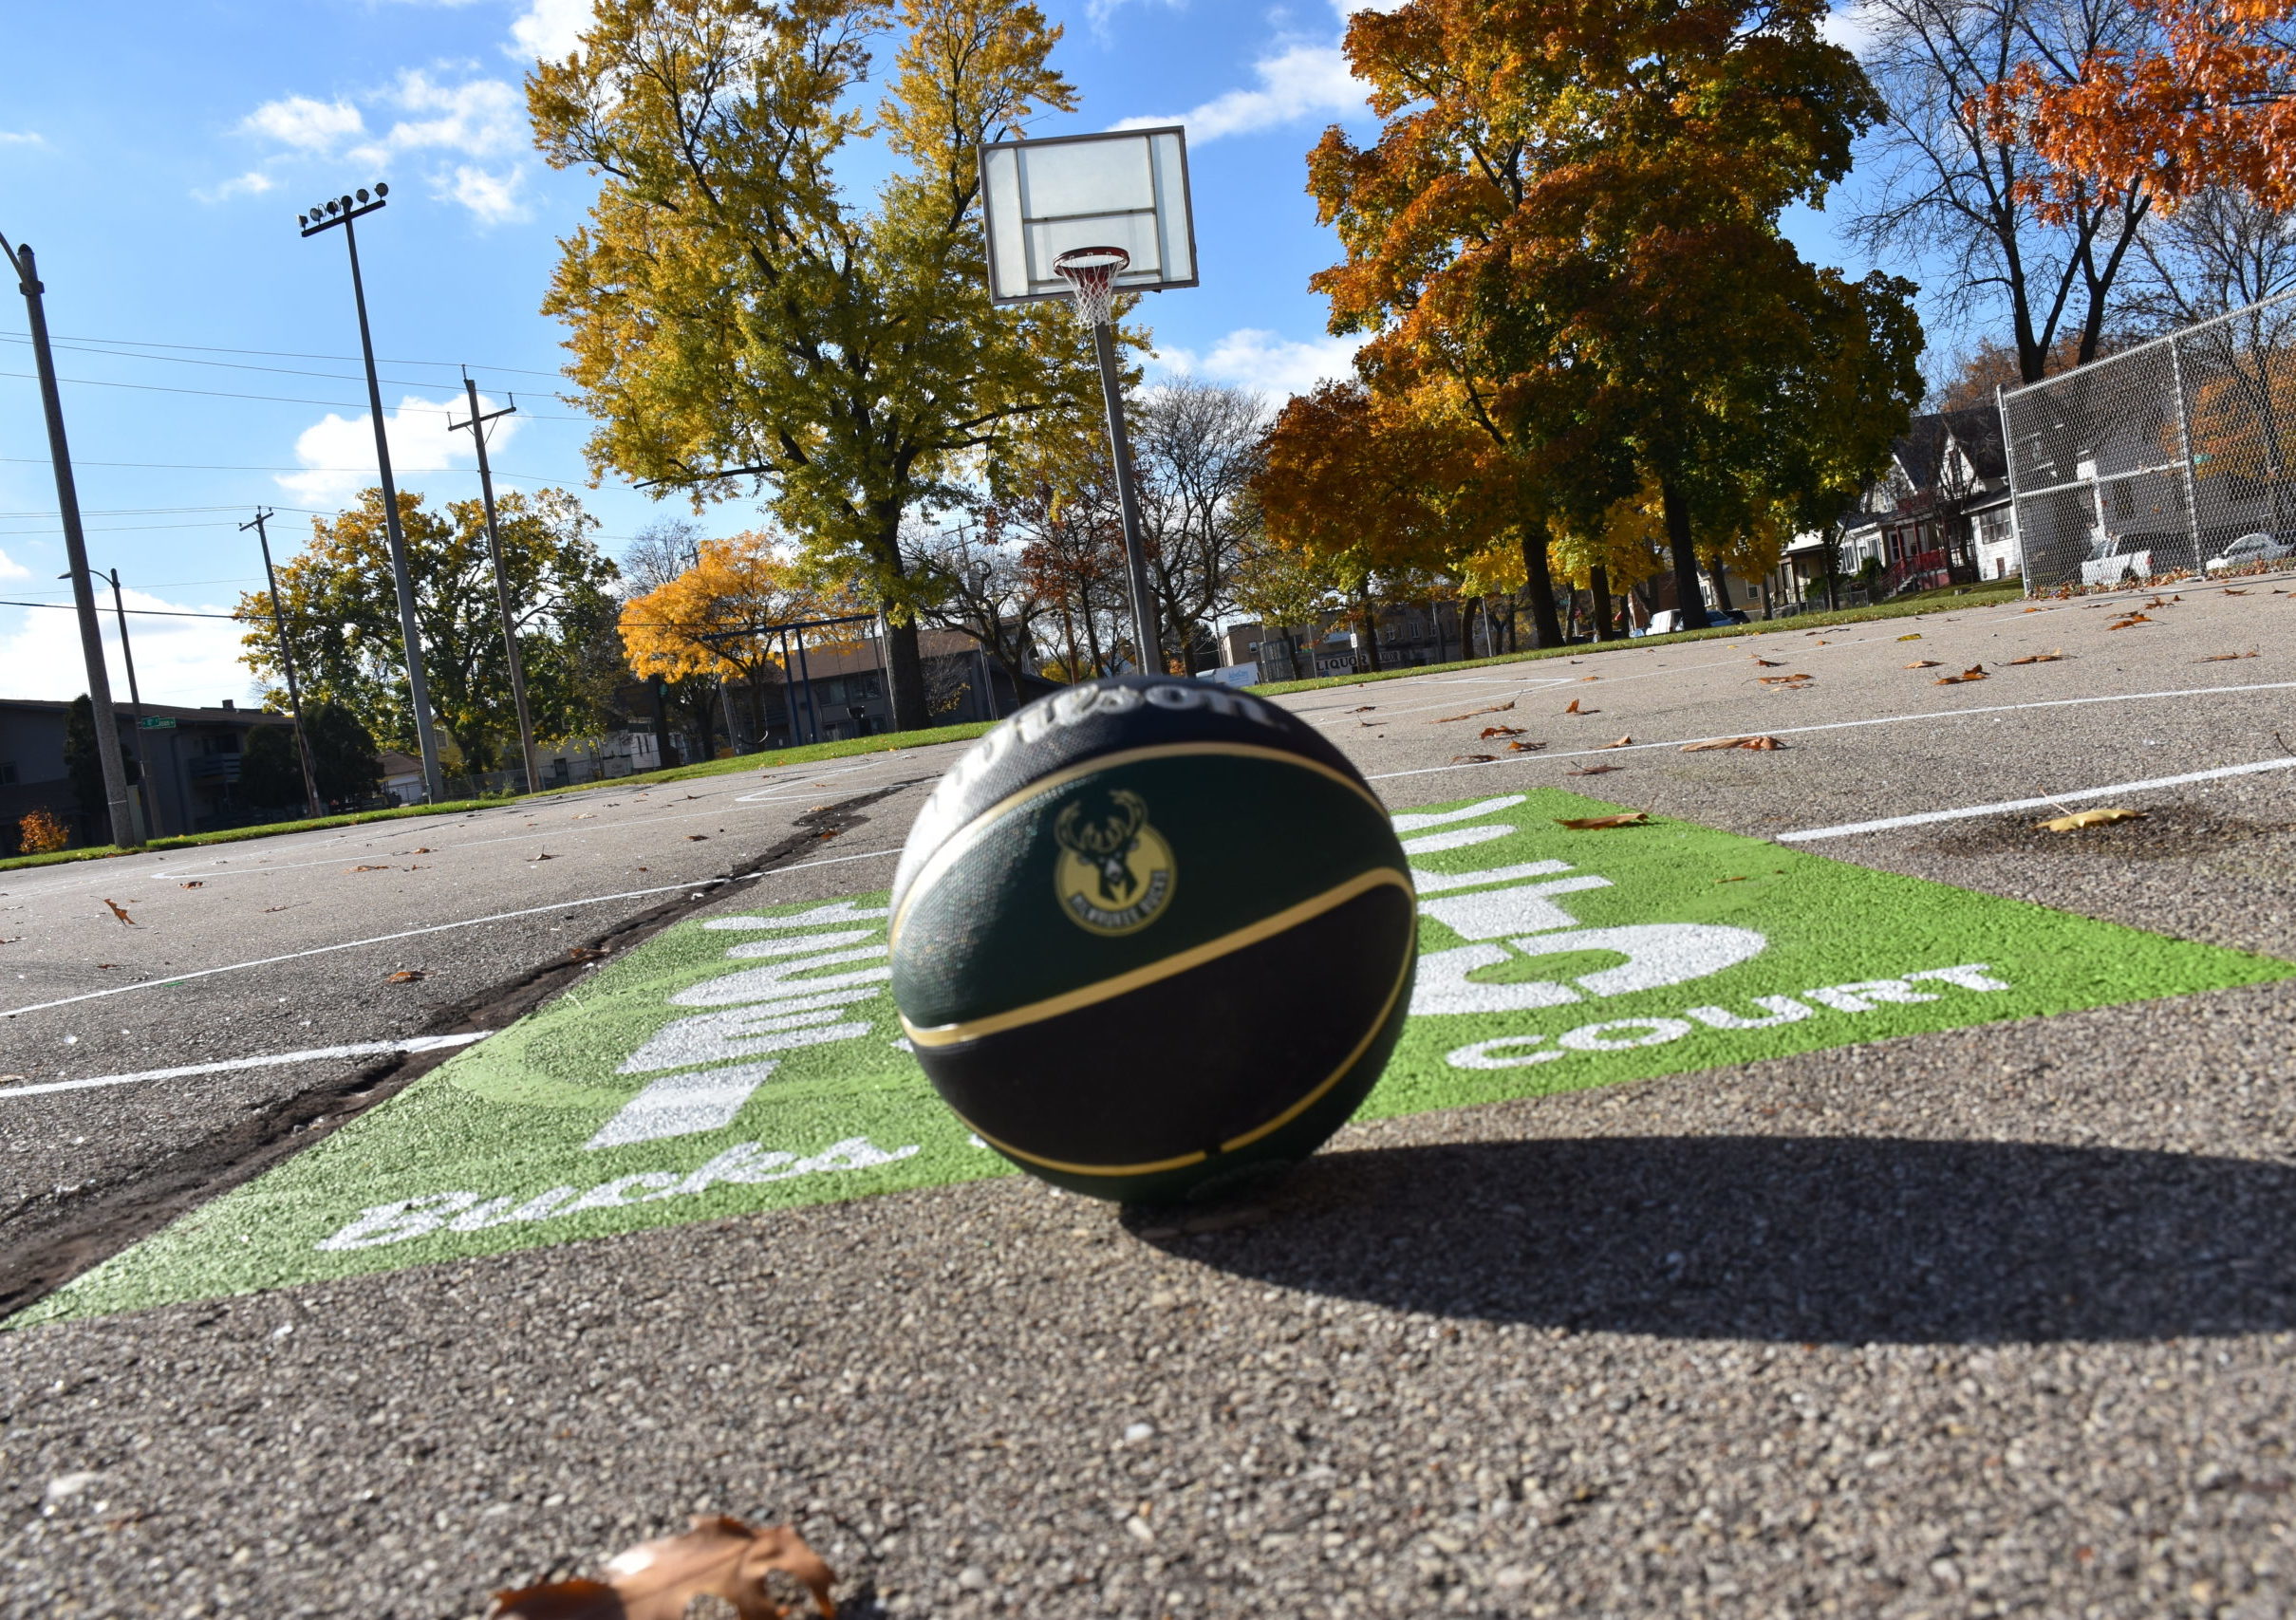 a basketball with a Bucks logo on an outdoor basketball court